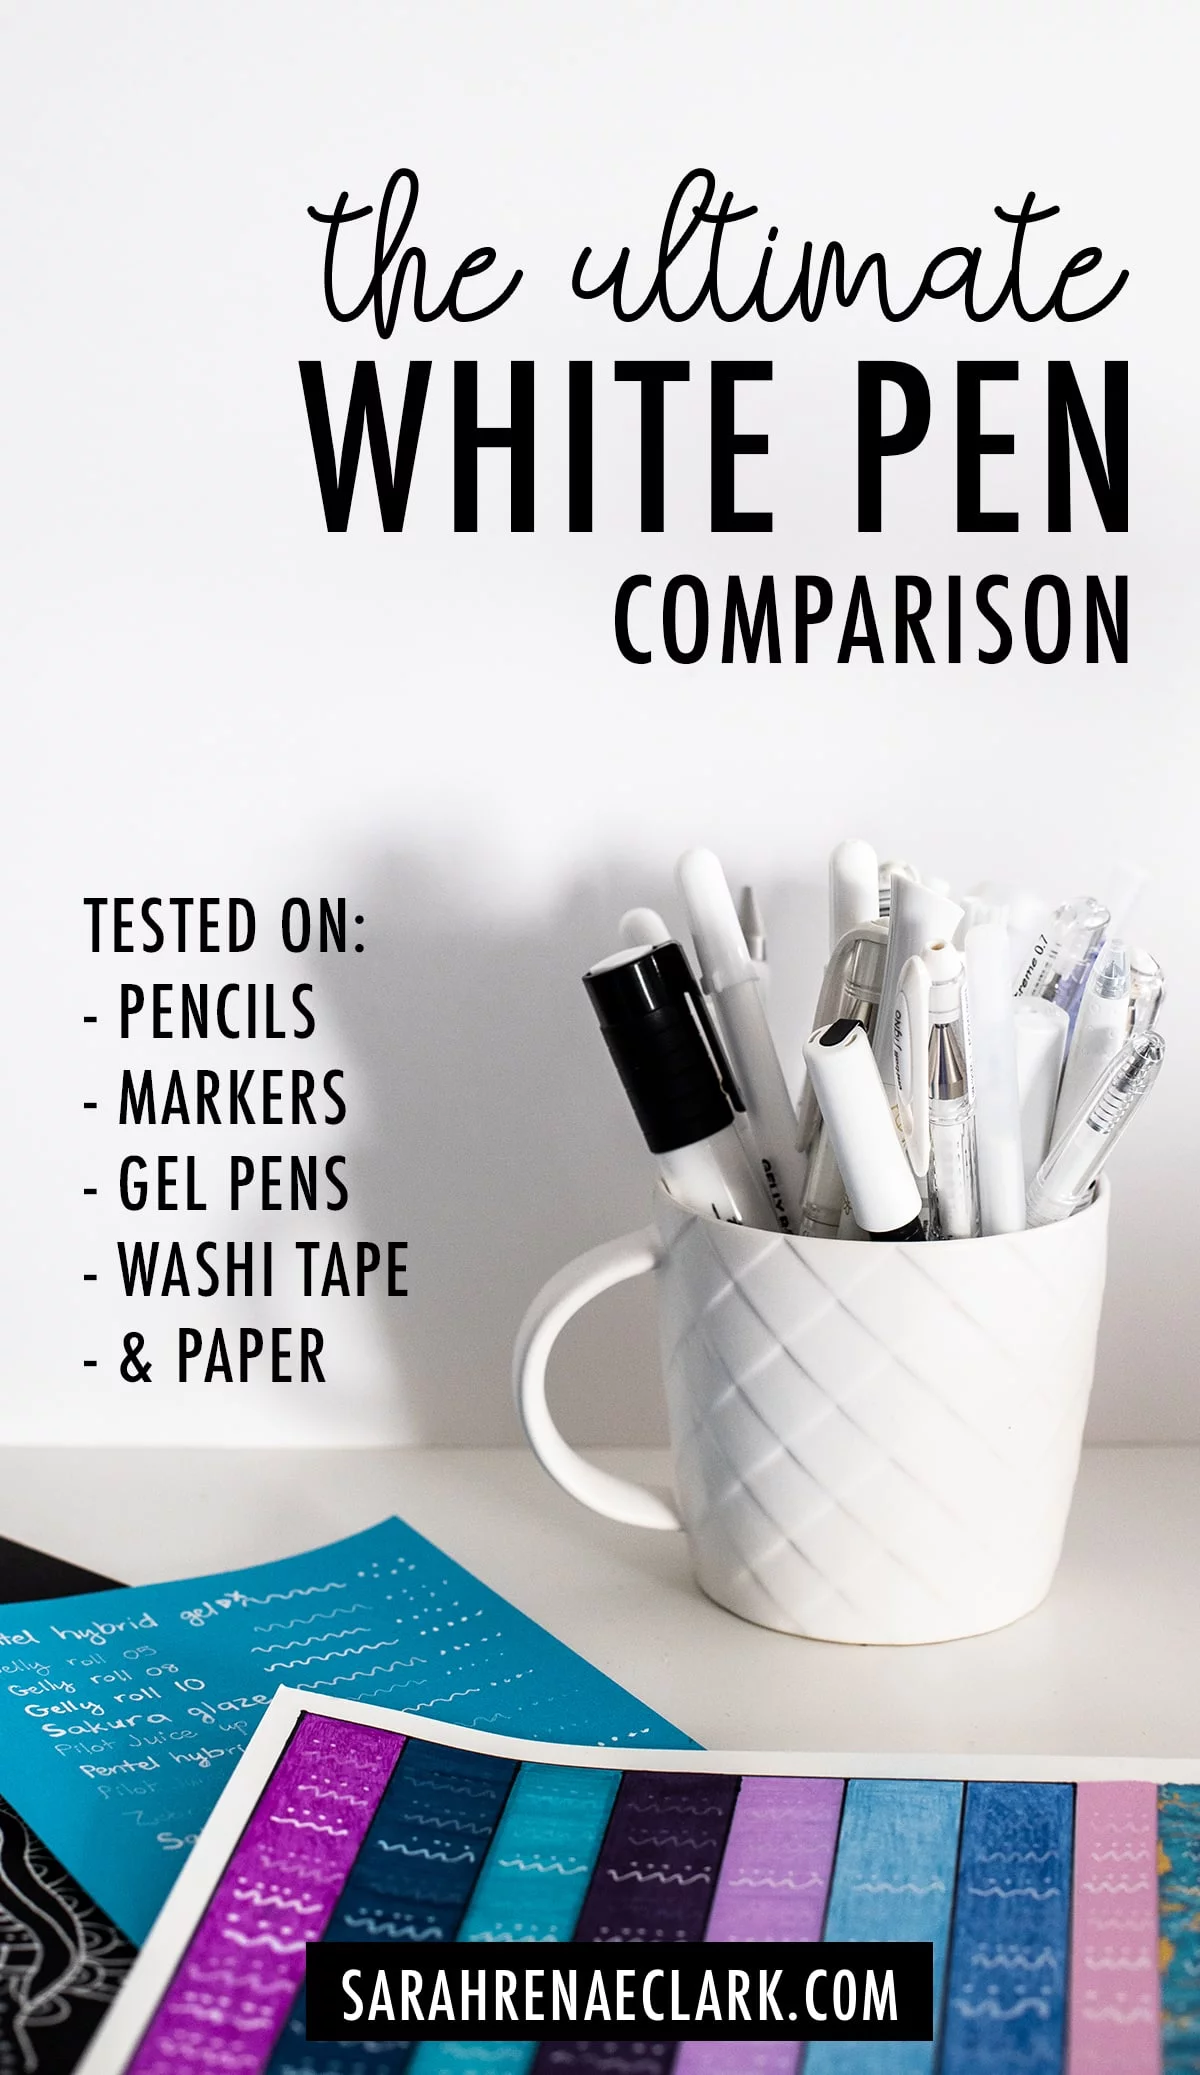 https://sarahrenaeclark.com/wp-content/uploads/2020/09/white-pen-comparison-tall-6.jpg.webp